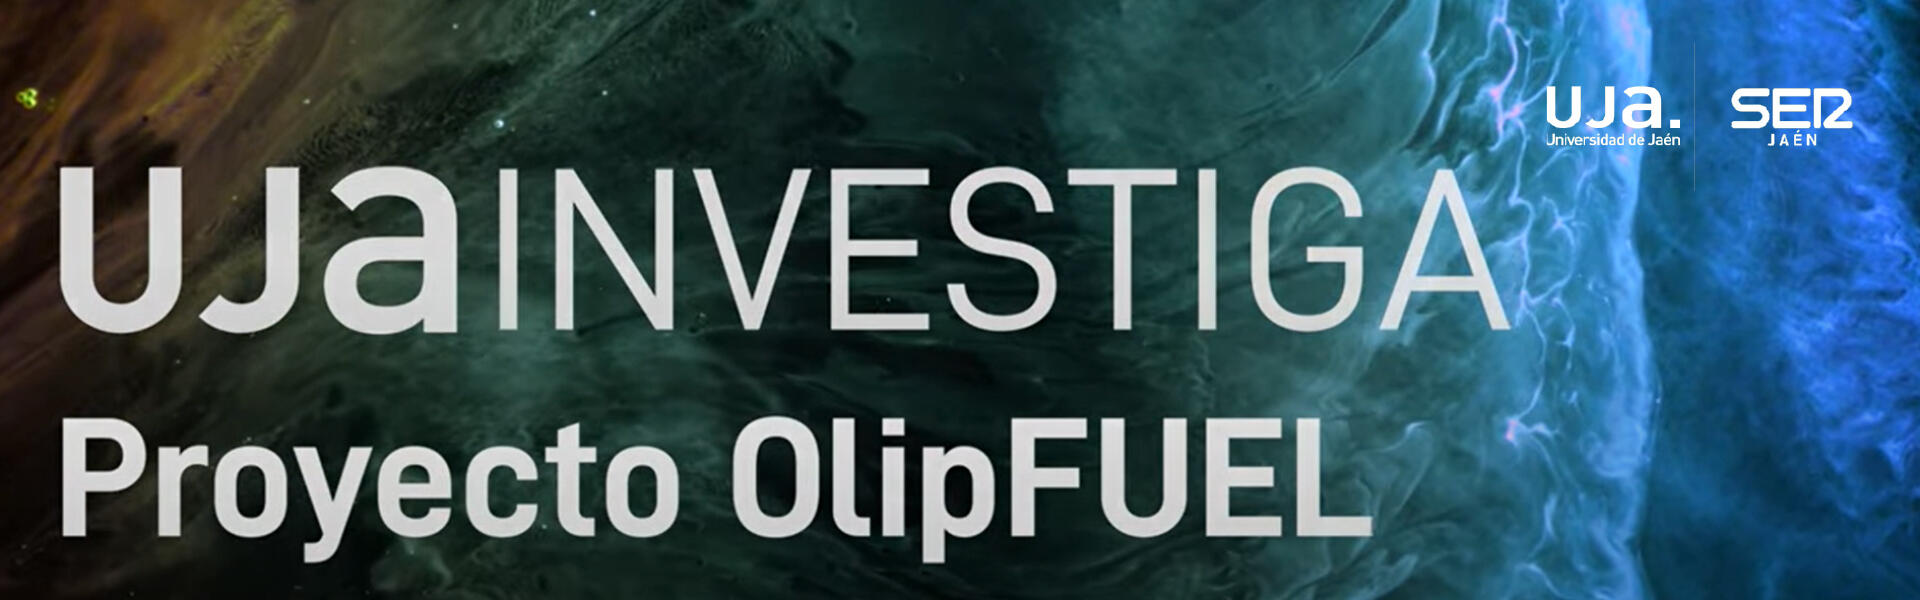 'UJA Investiga'. 'OliPFUEL'